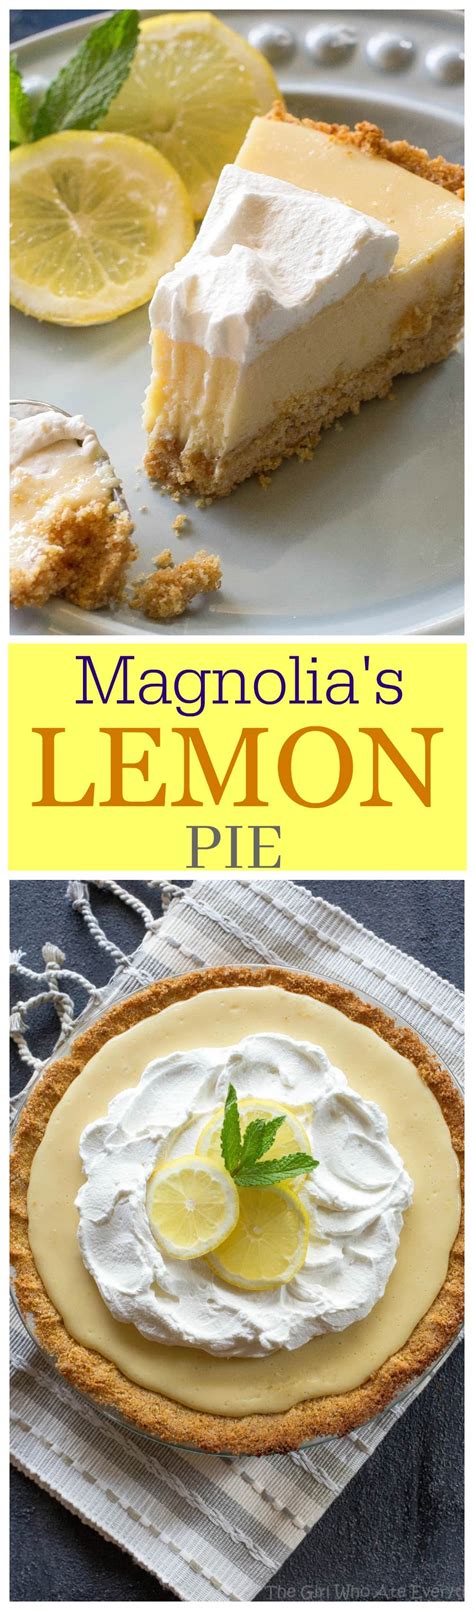 easy-lemon-pie-recipe-the-girl-who-ate-everything image